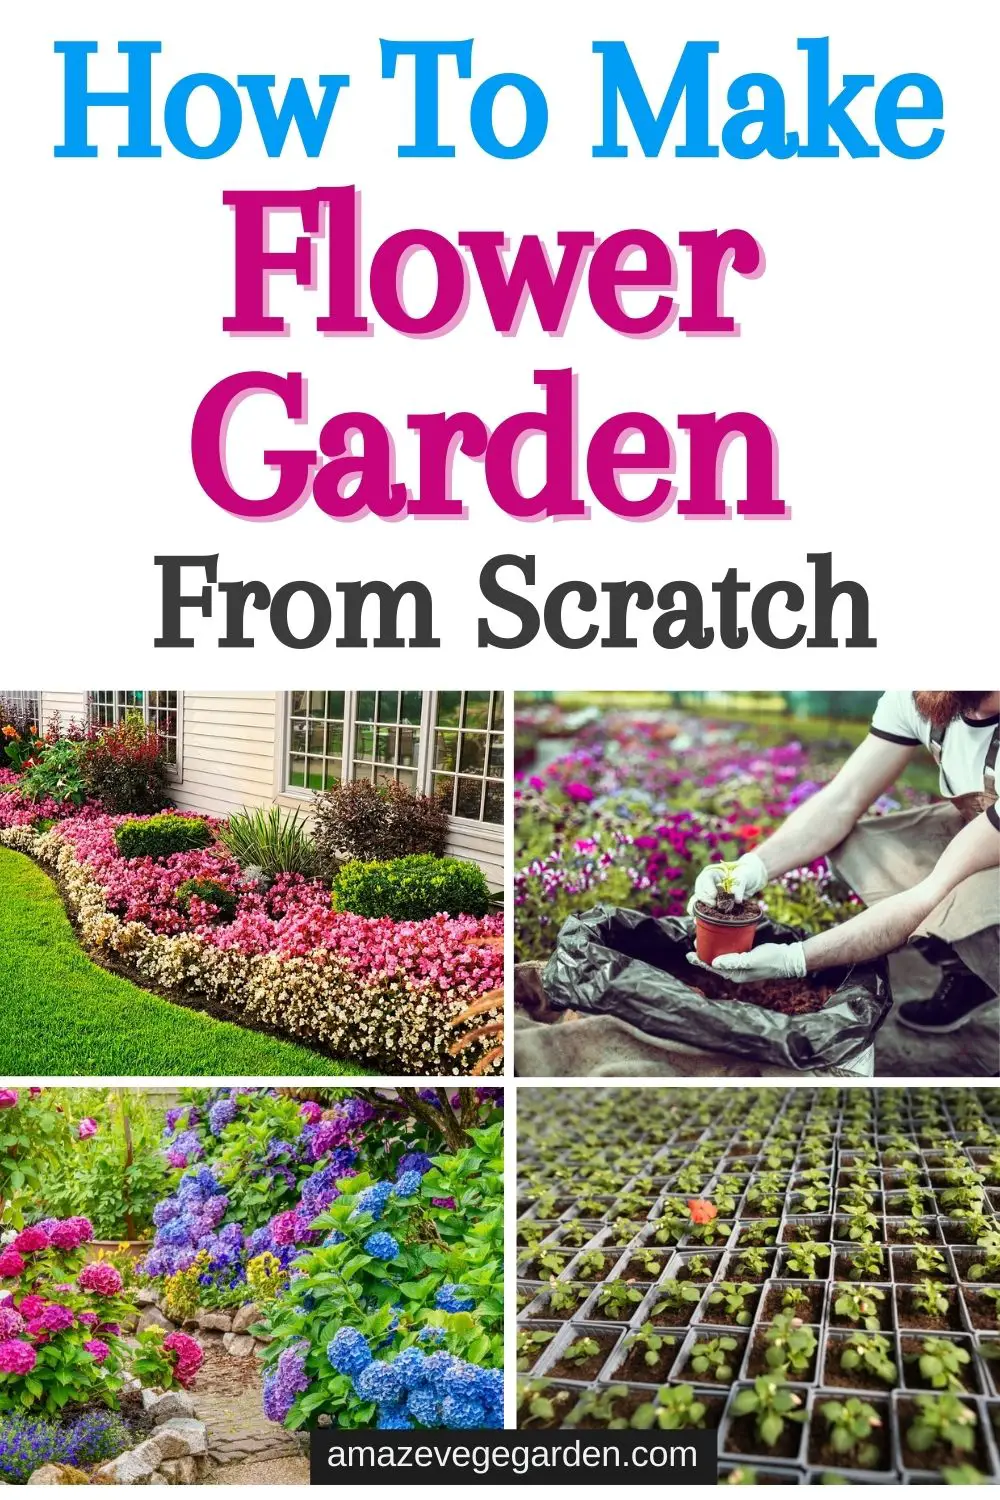 How To Make a Flower Garden From Scratch